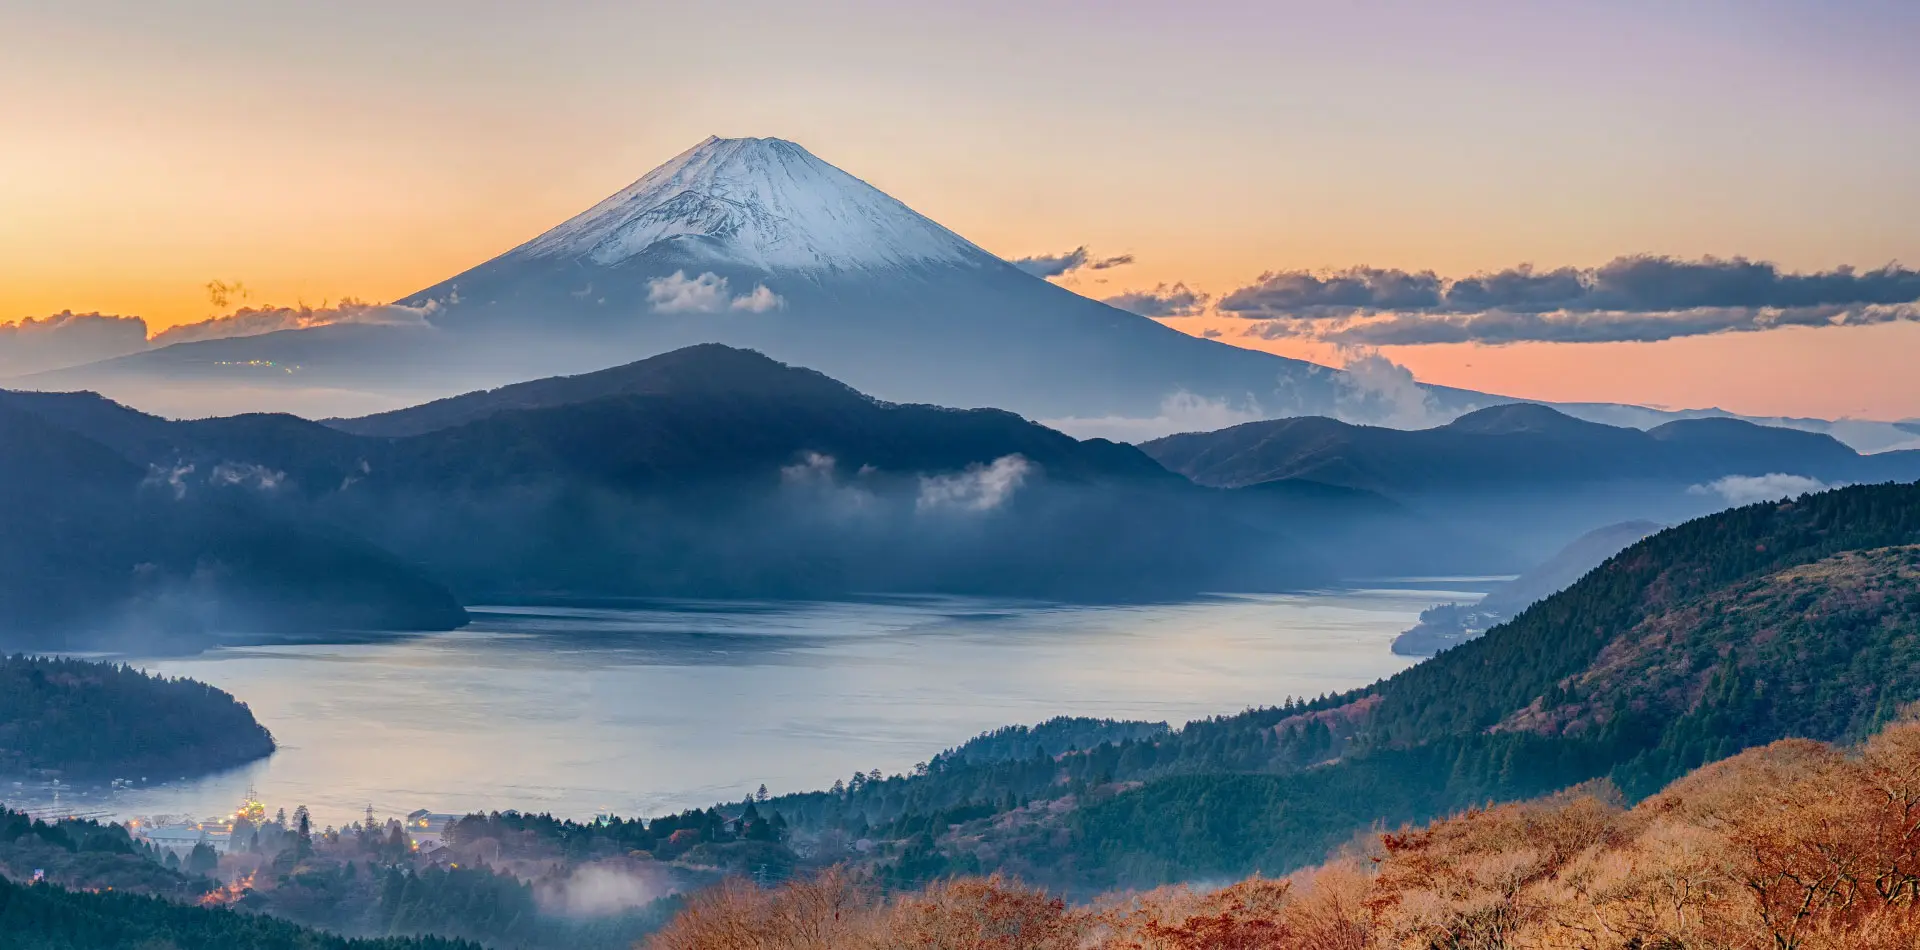 image:Mt.Fuji